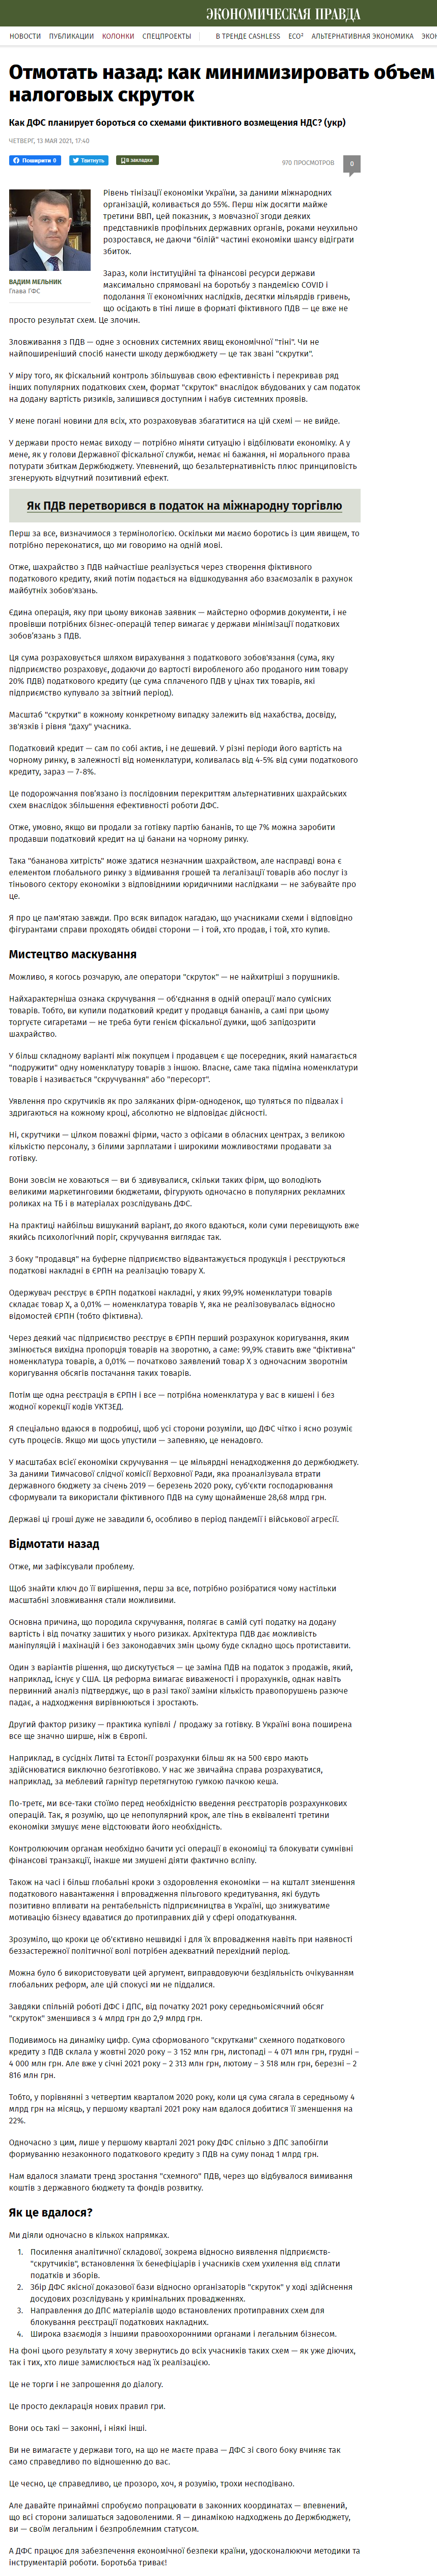 https://www.epravda.com.ua/rus/columns/2021/05/13/673835/